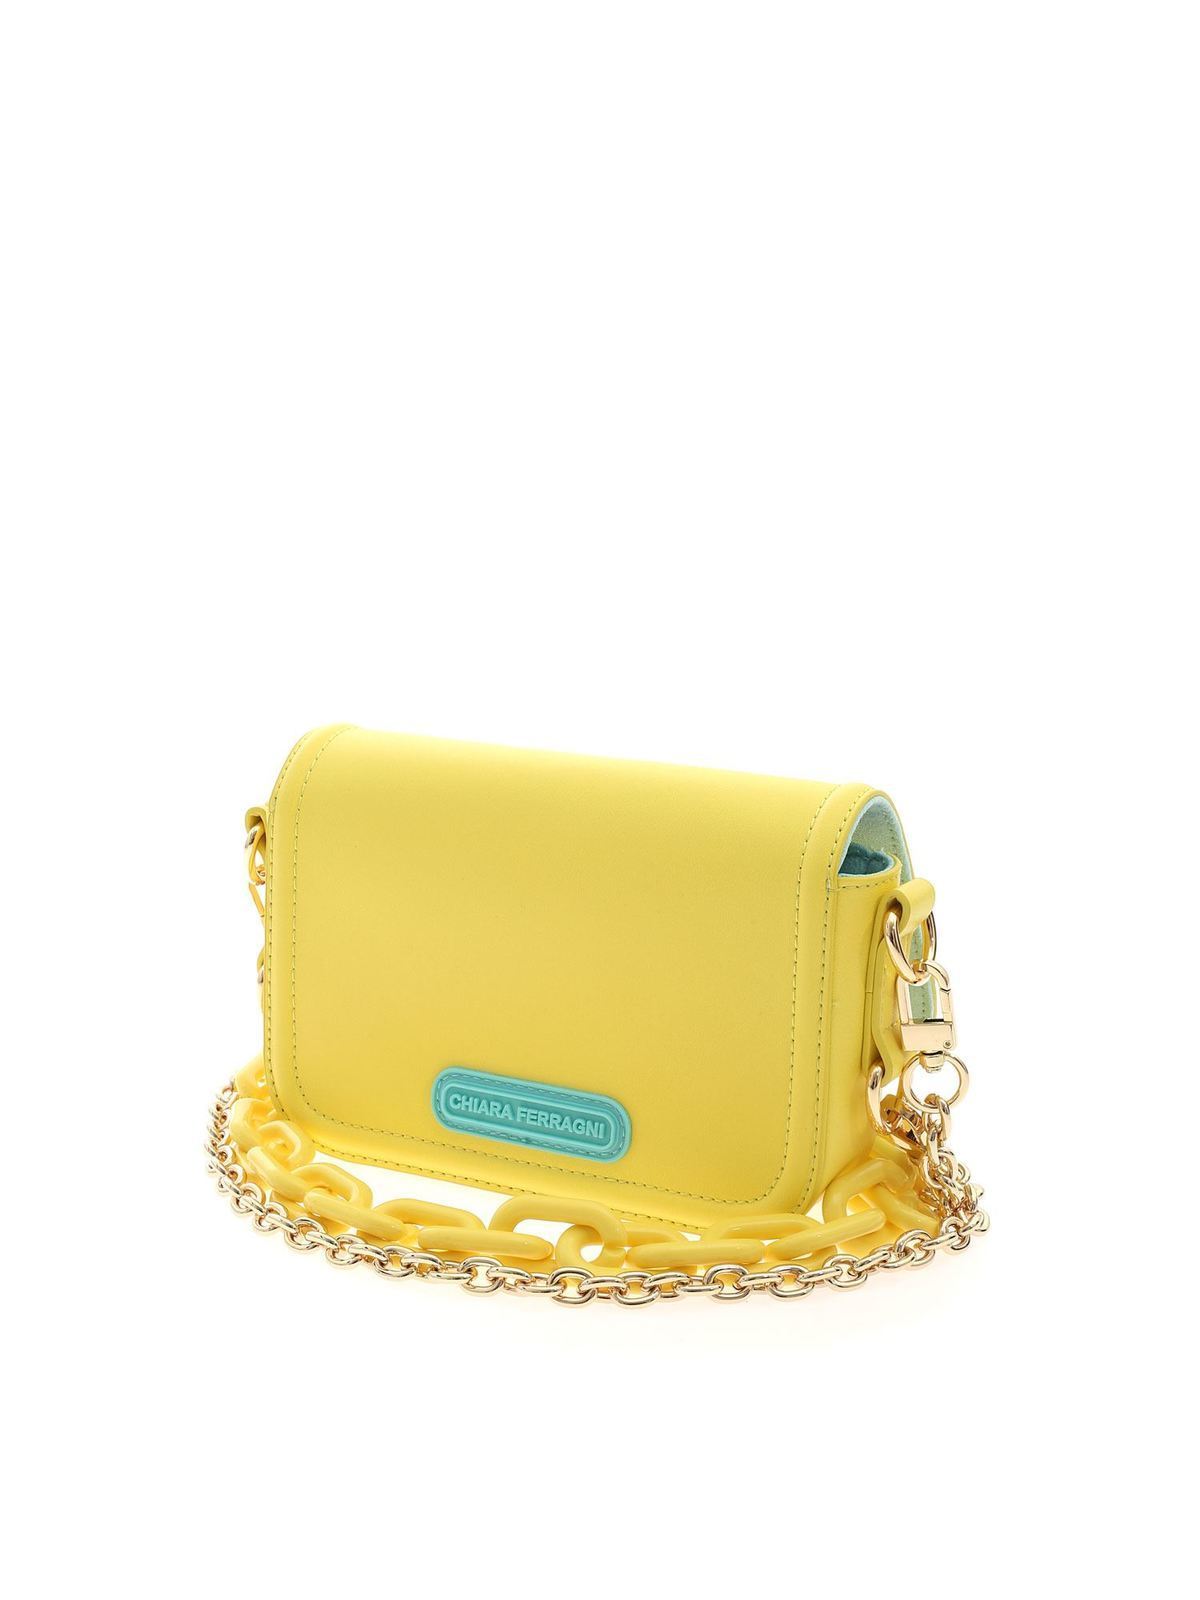 Chiara Ferragni small eyelike crossbody bag in yellow